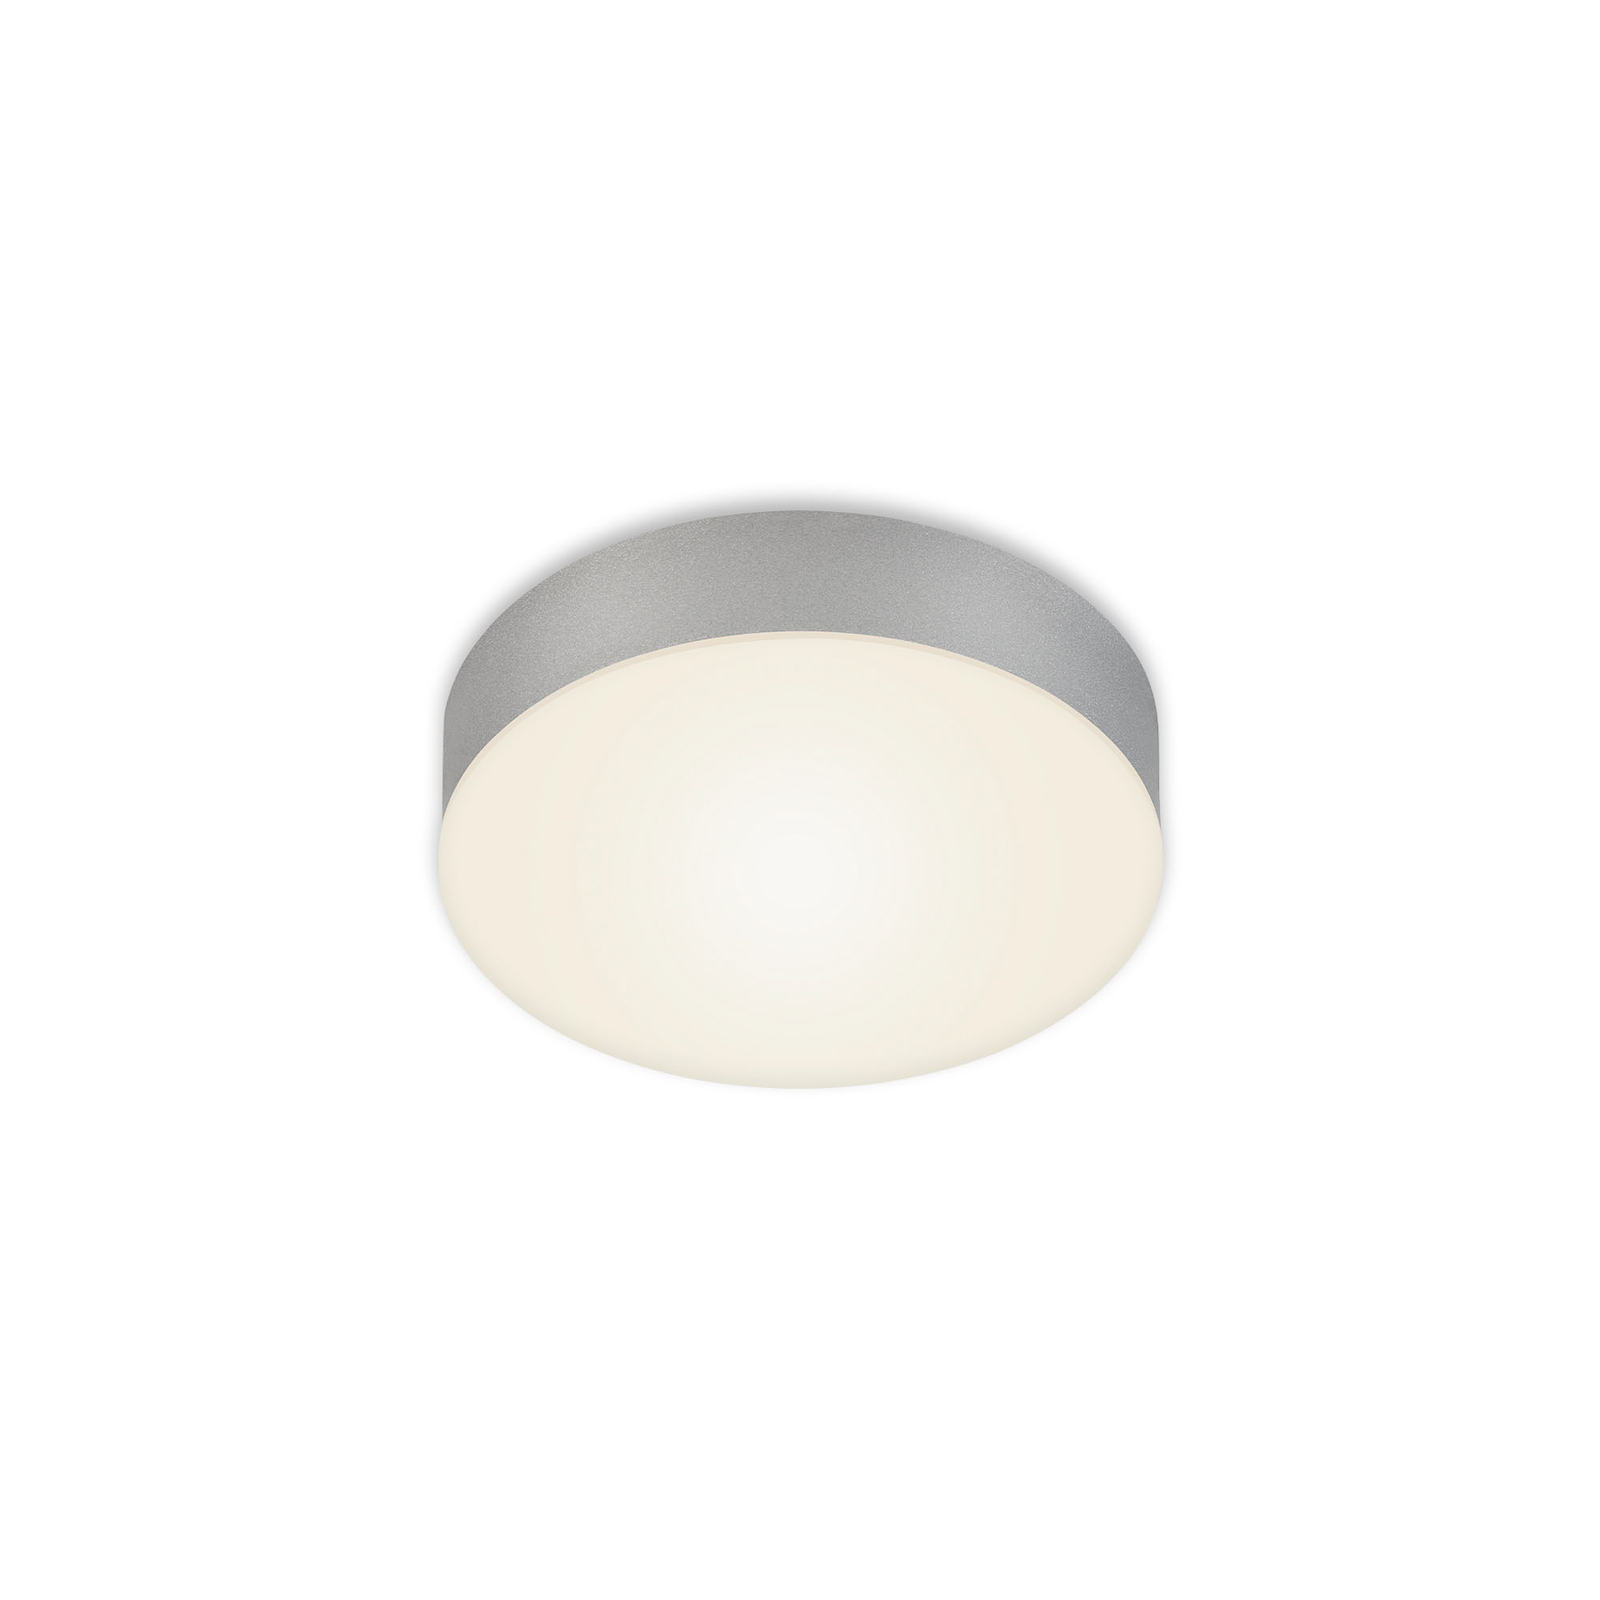 LED-Deckenleuchte Flame, Ø 15,7 cm, silber